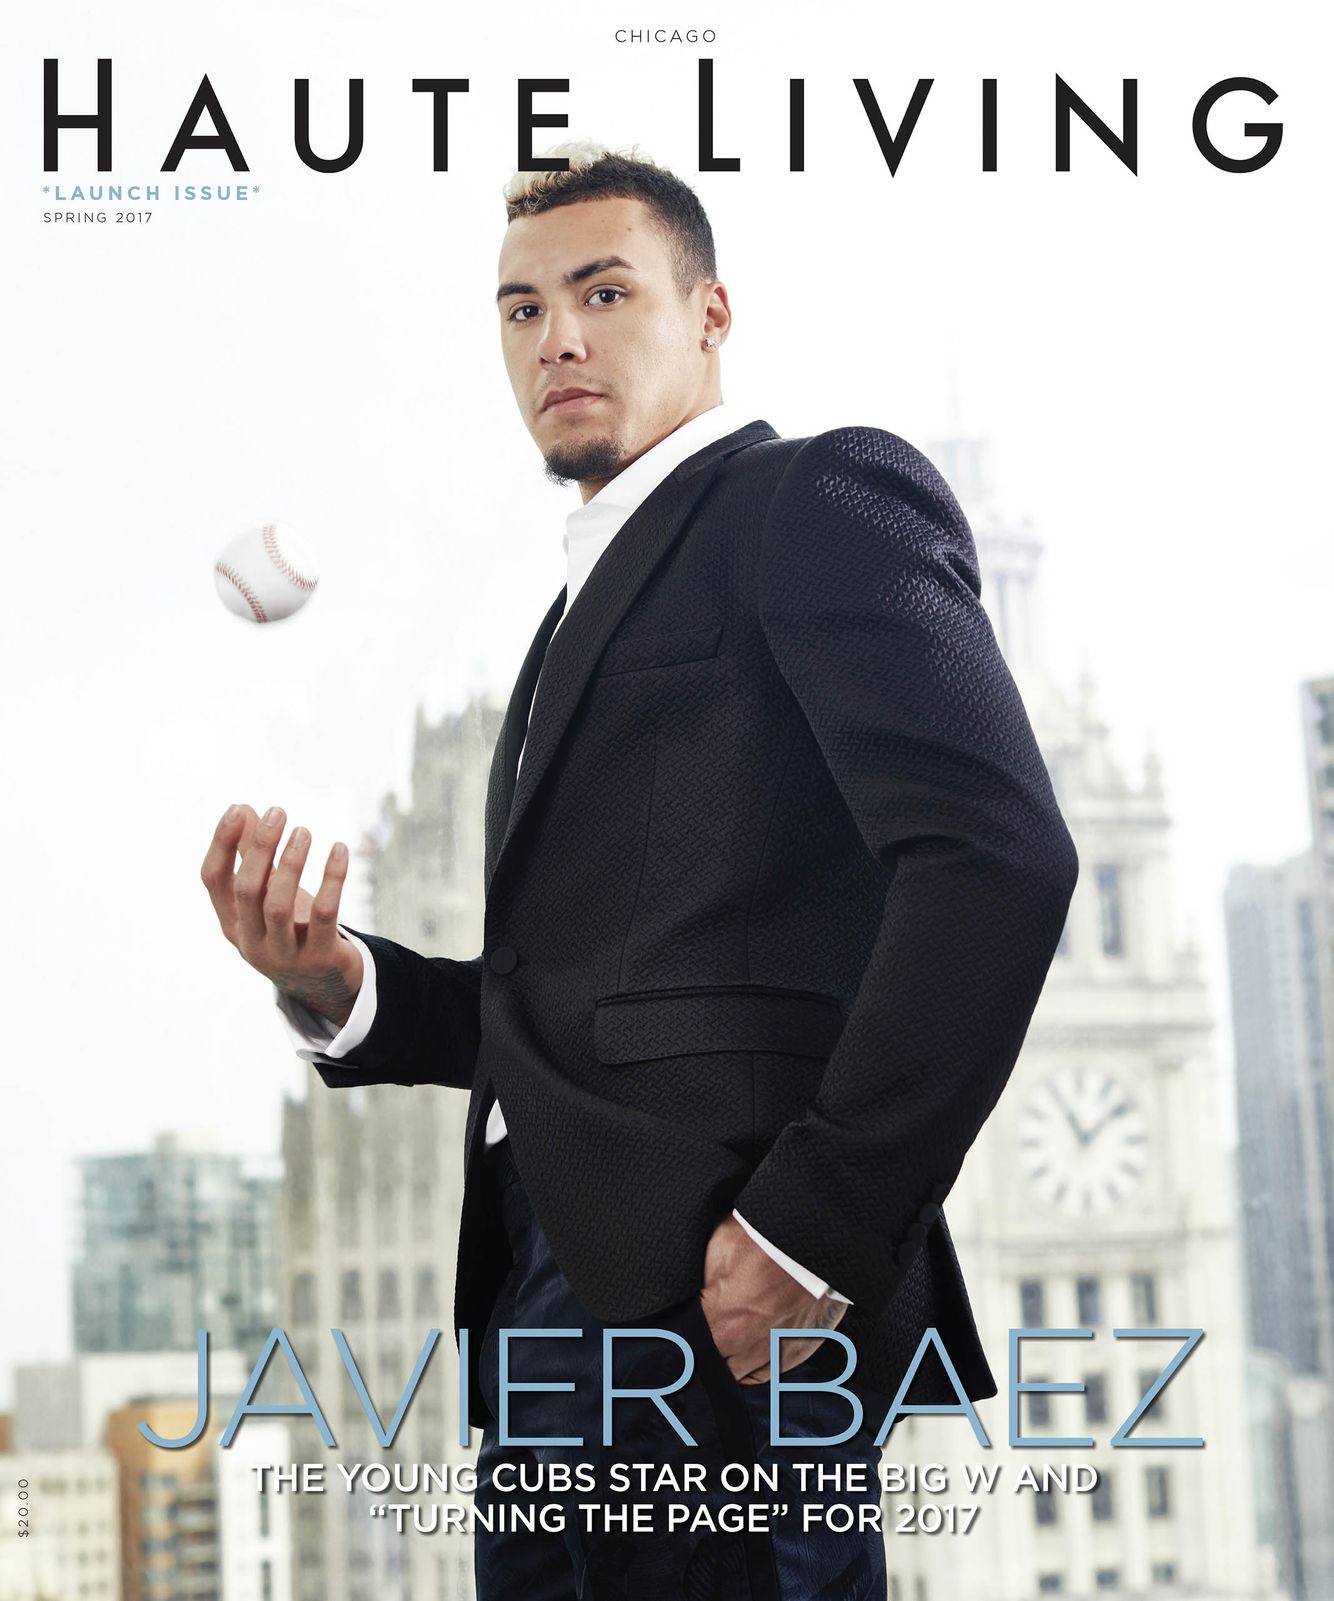 Javier Baez Haute Living Magazine cover by Chicago Advertising Photographer Jeff  Schear